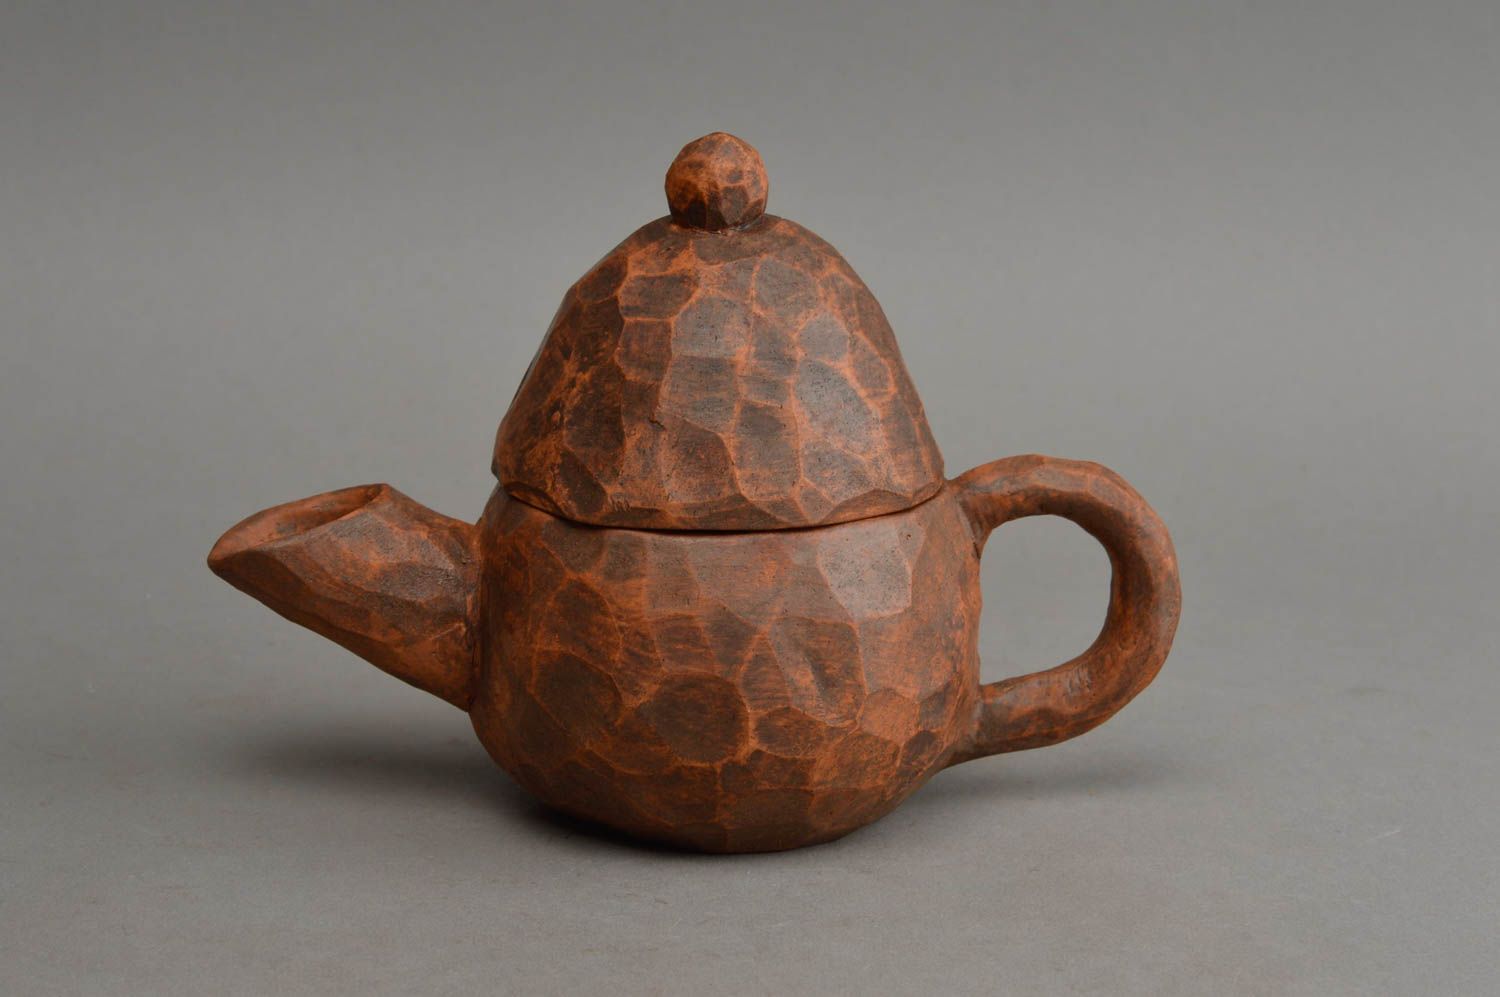 Unusual handmade ceramic teapot designer clay teapot table setting ideas photo 2